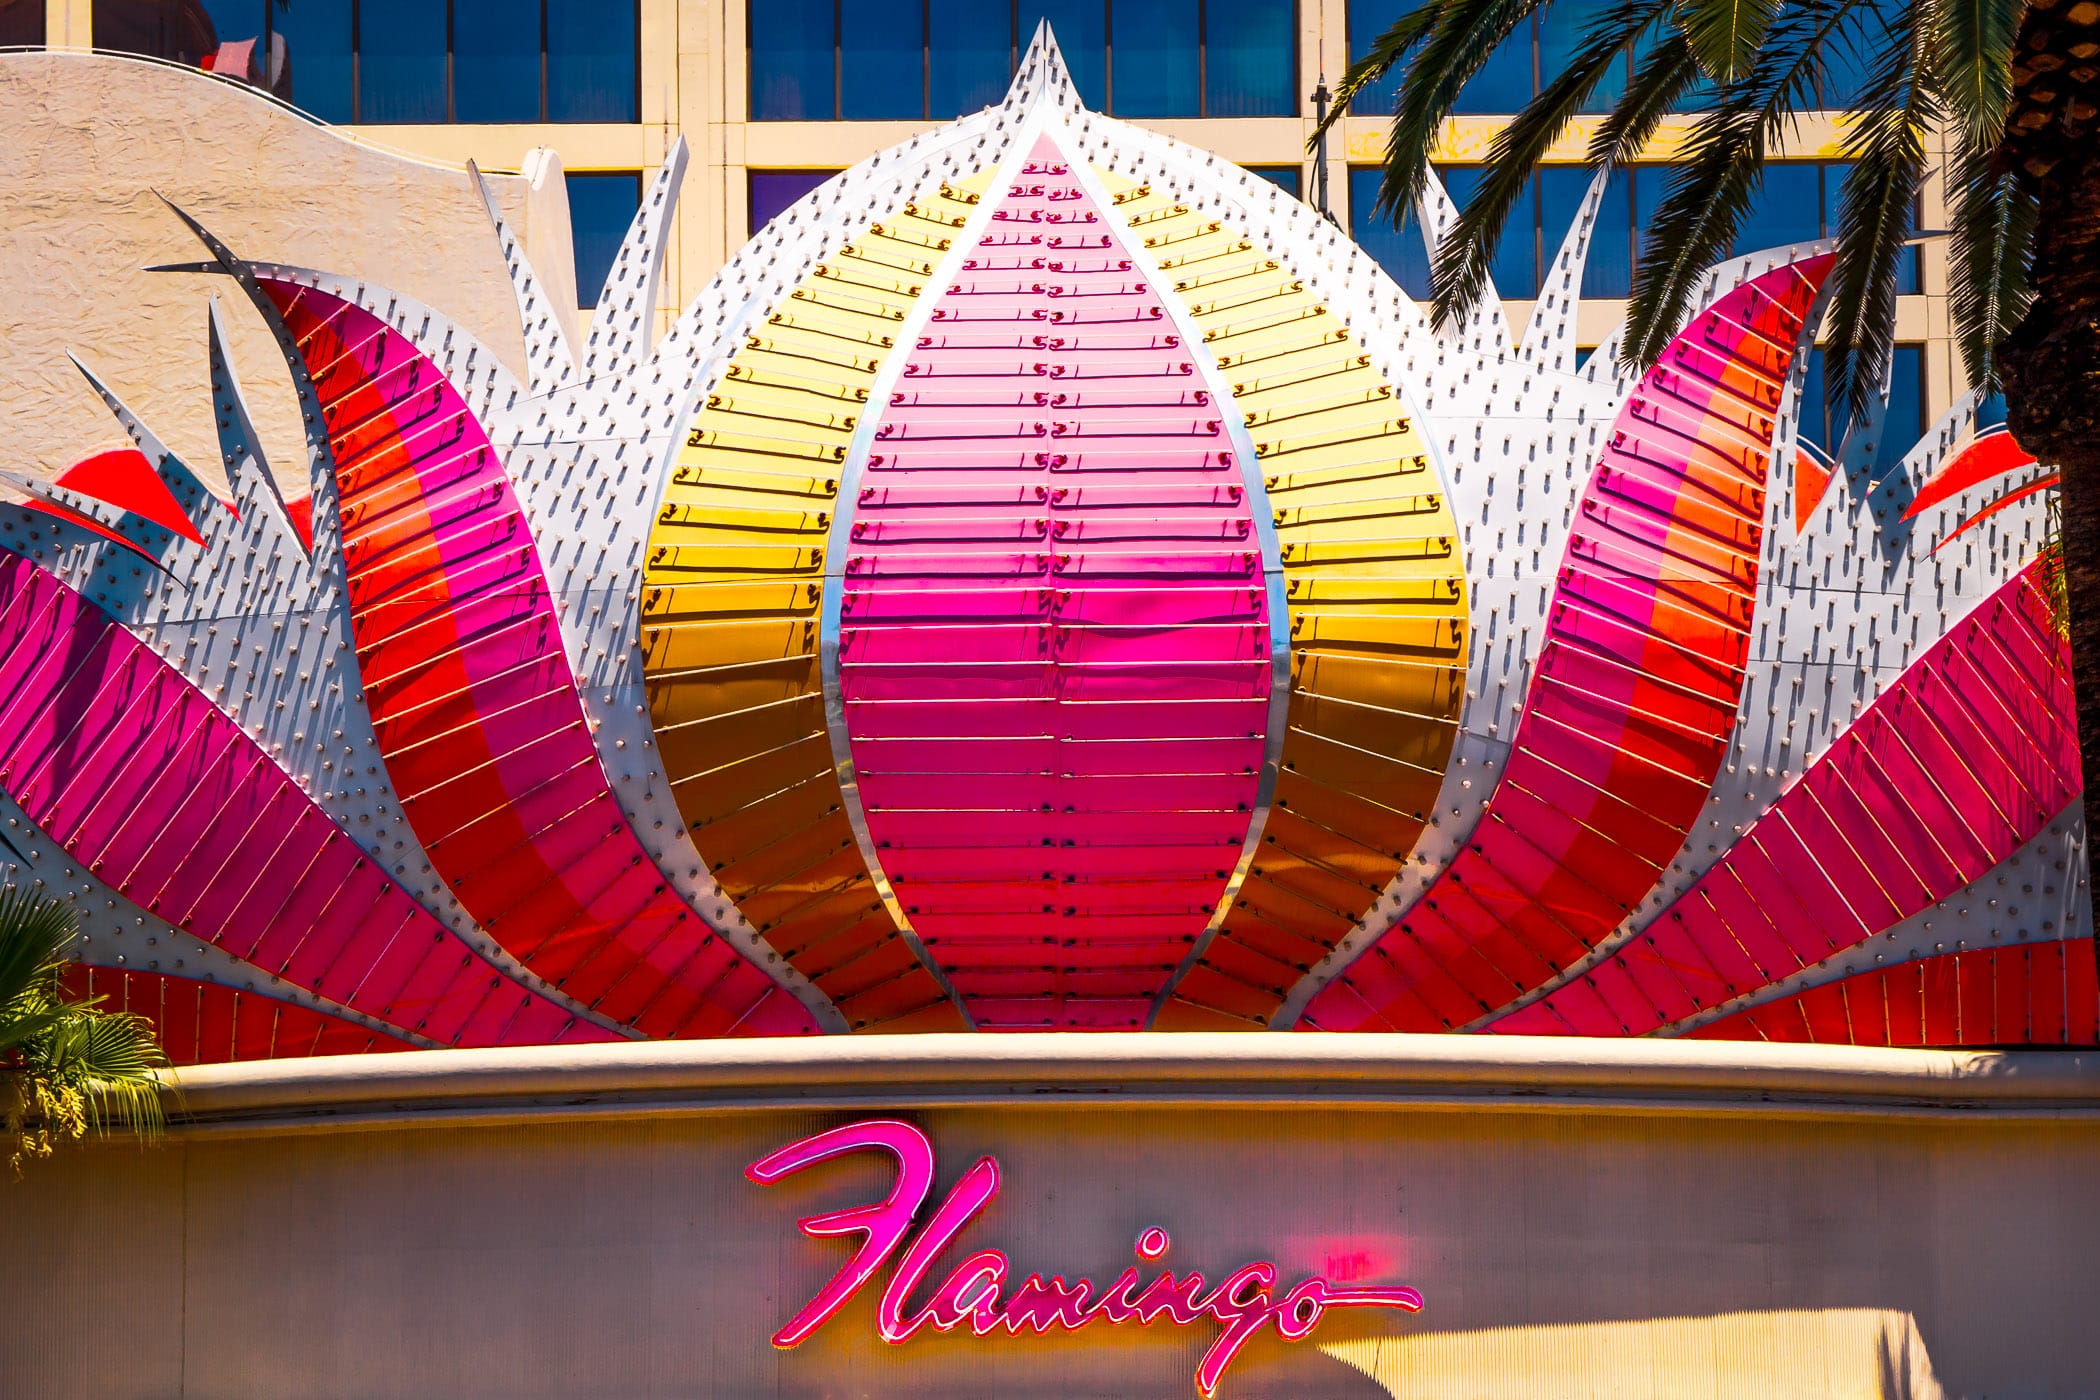 Exterior sign detail of The Flamingo Hotel & Casino, Las Vegas.